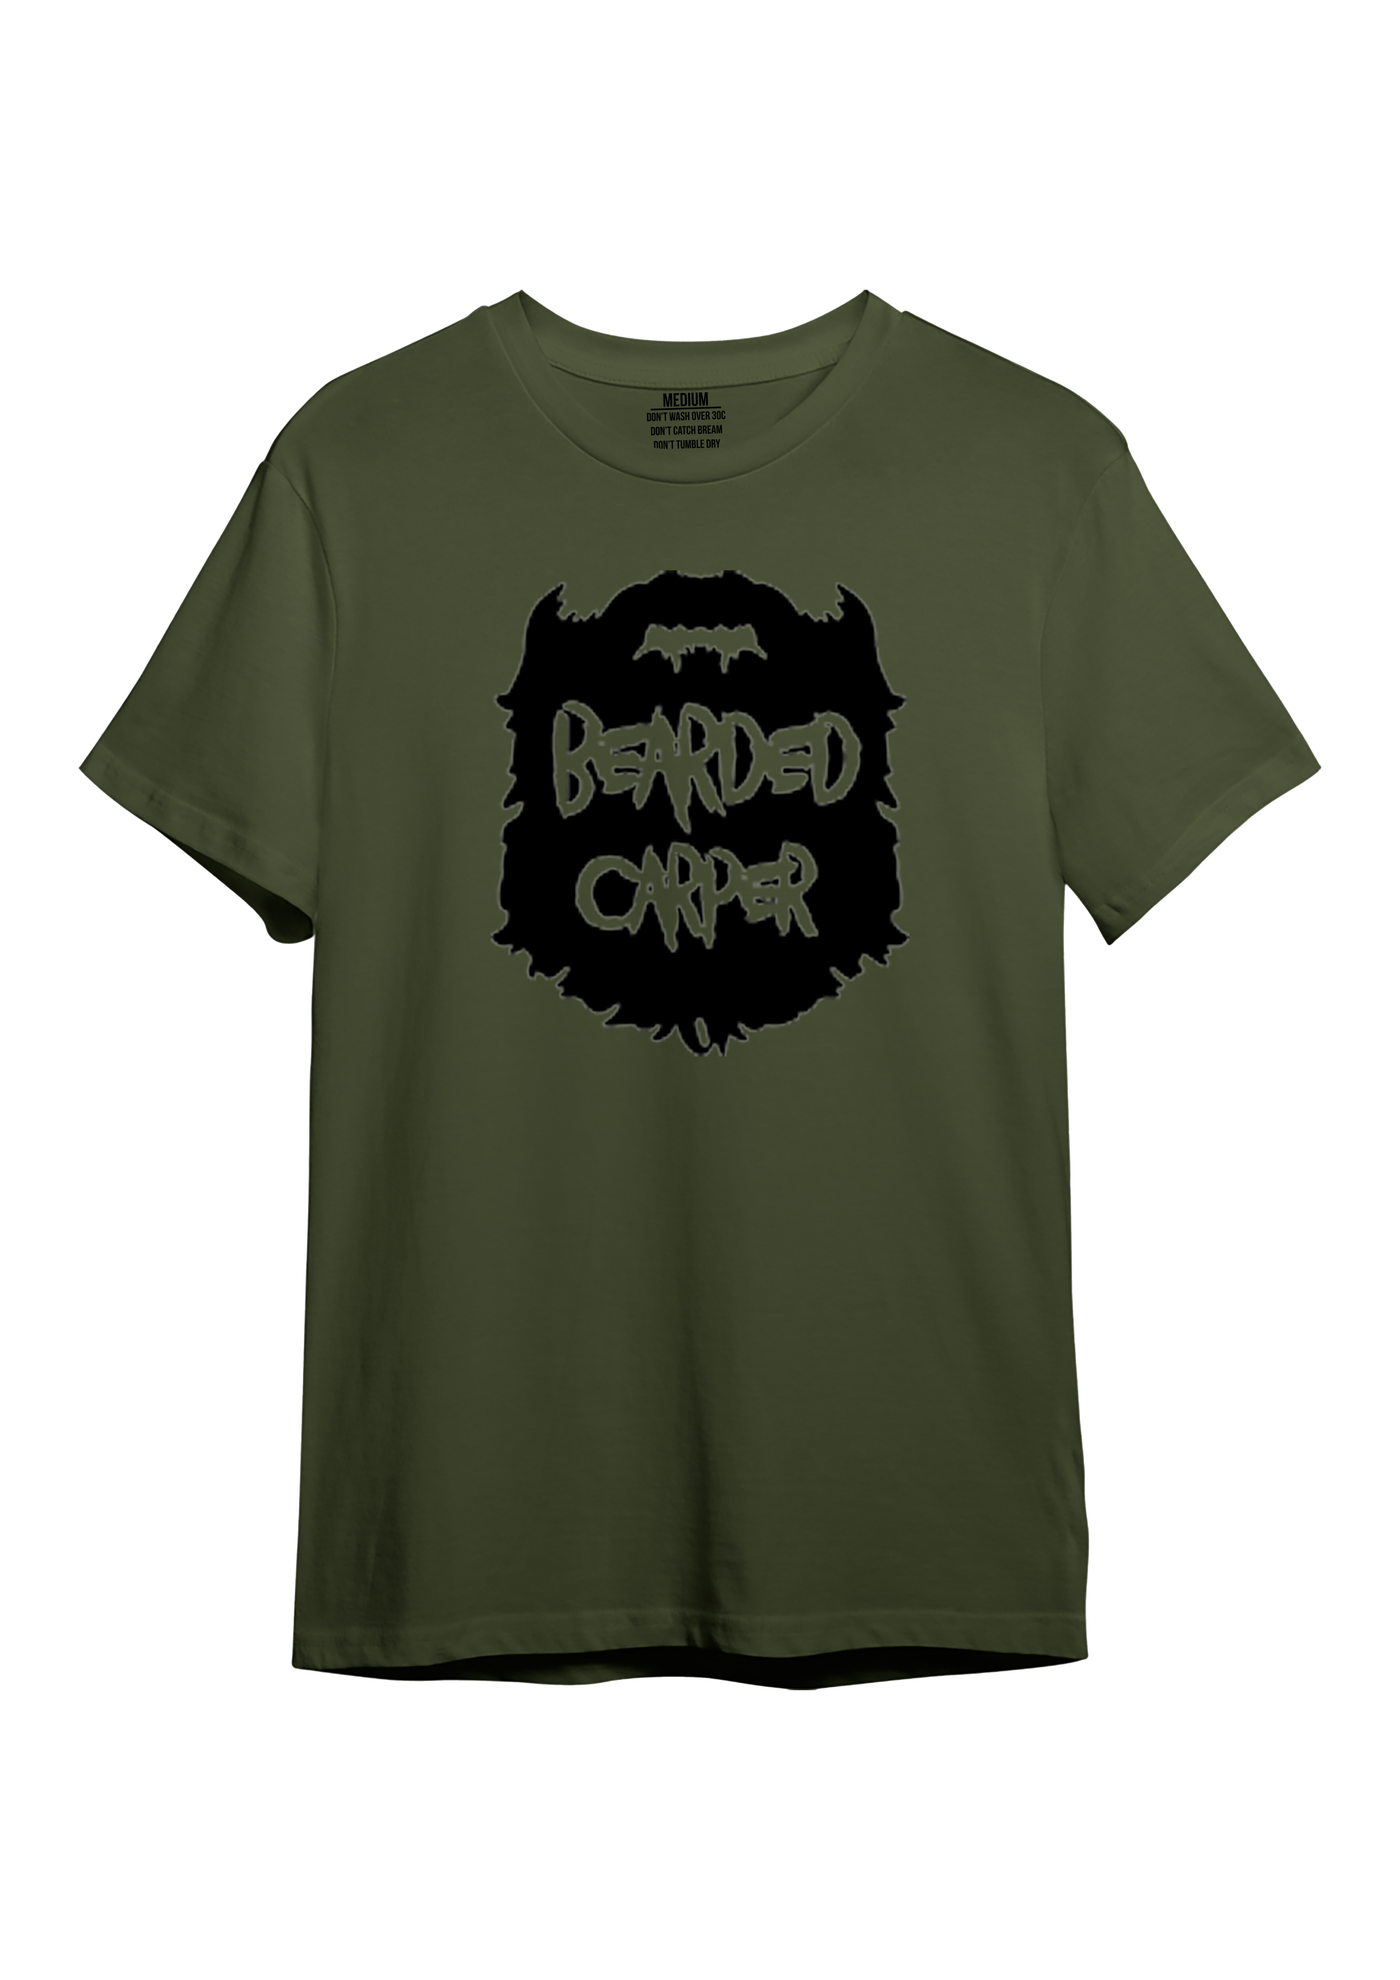 Big Bearded Carper T-Shirt